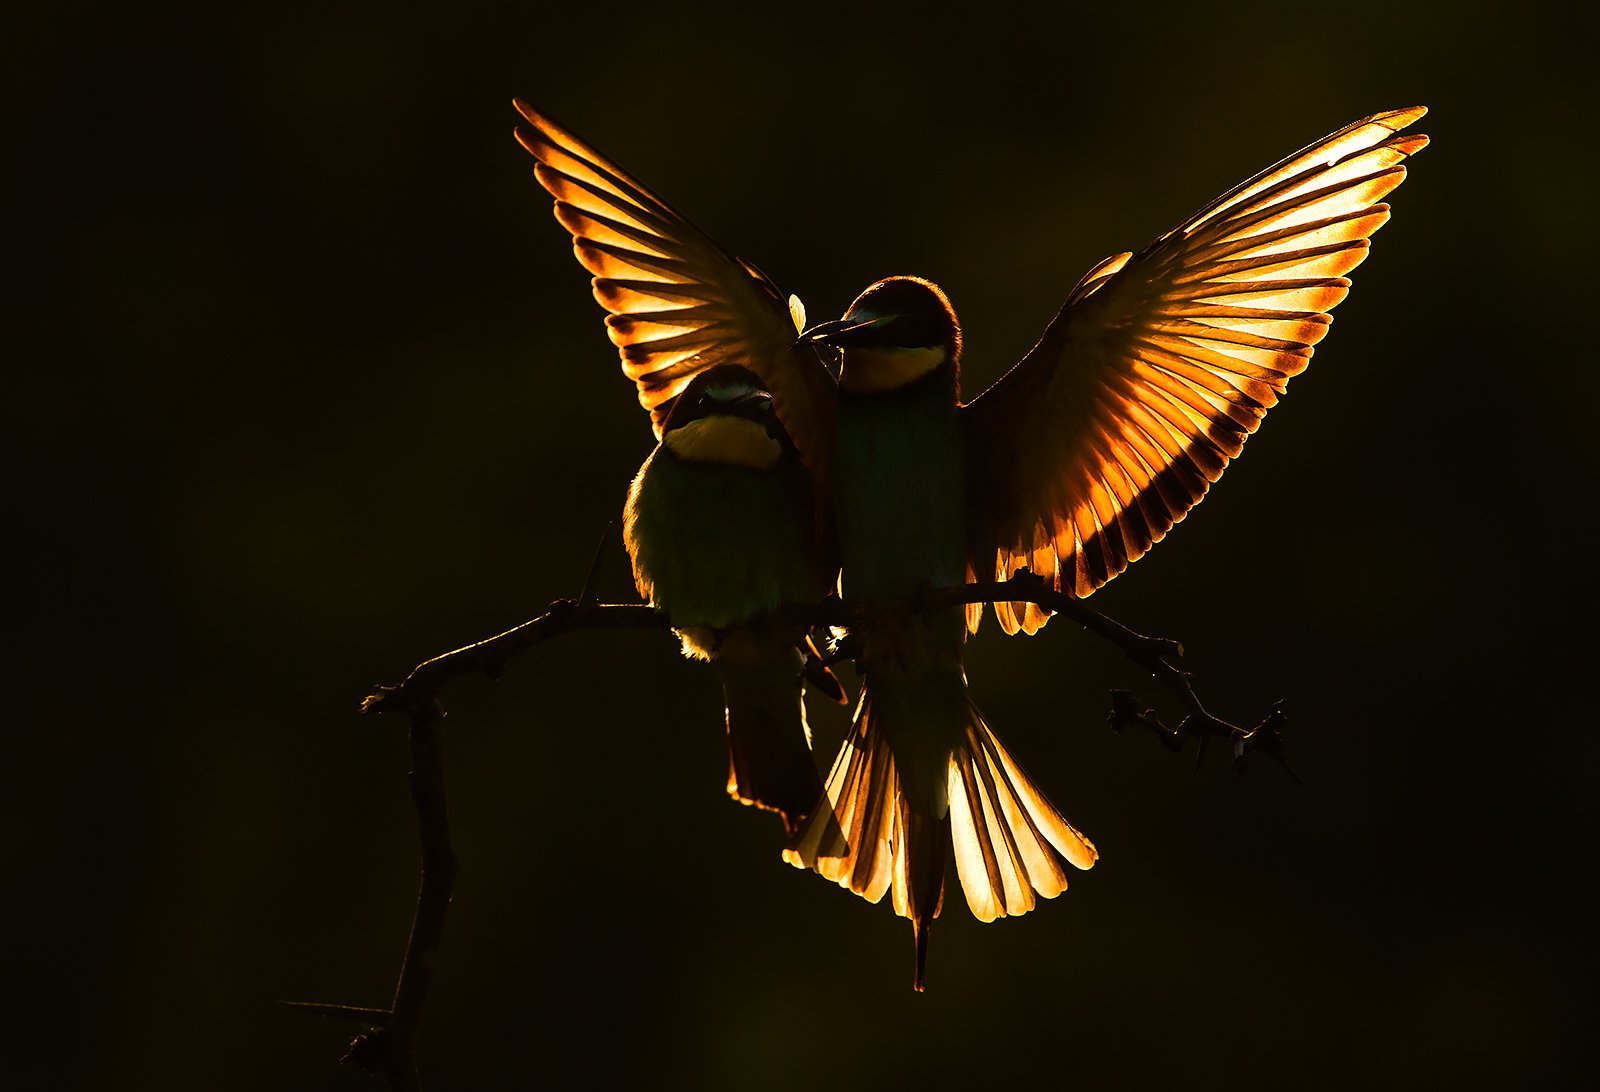 bee-eater wildlife photography nature, Radoslav Tsvetkov